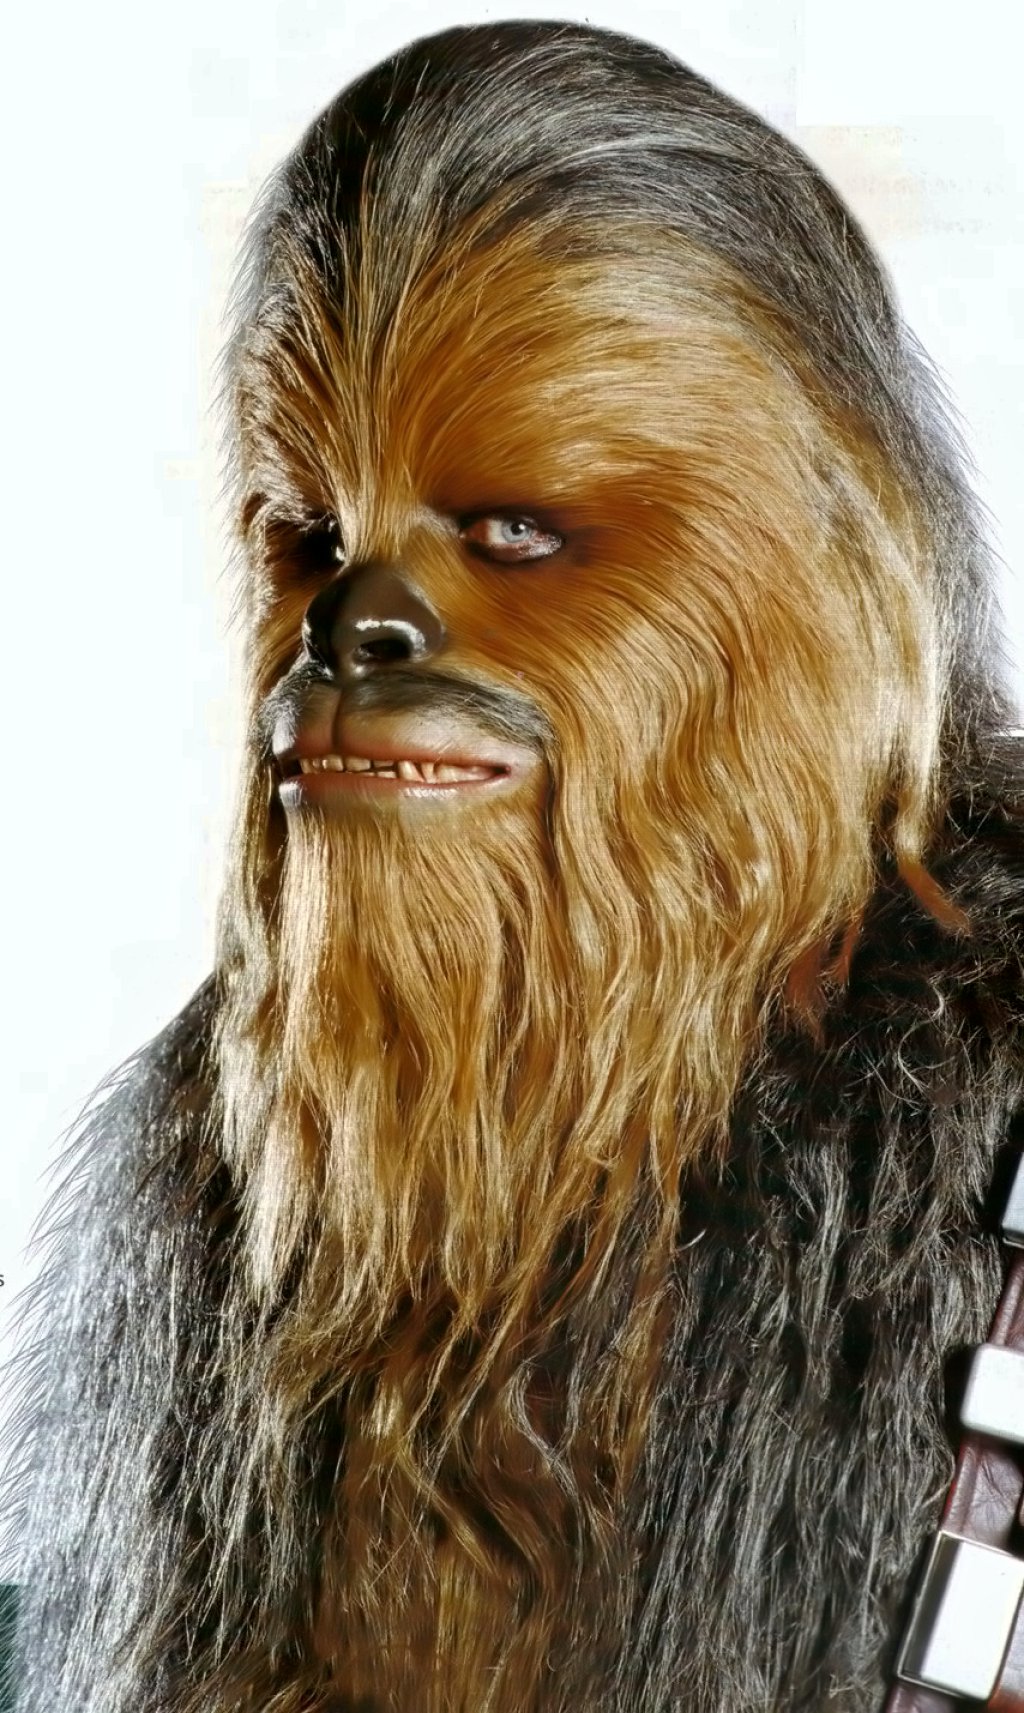 Star Wars Hairy Guy 98